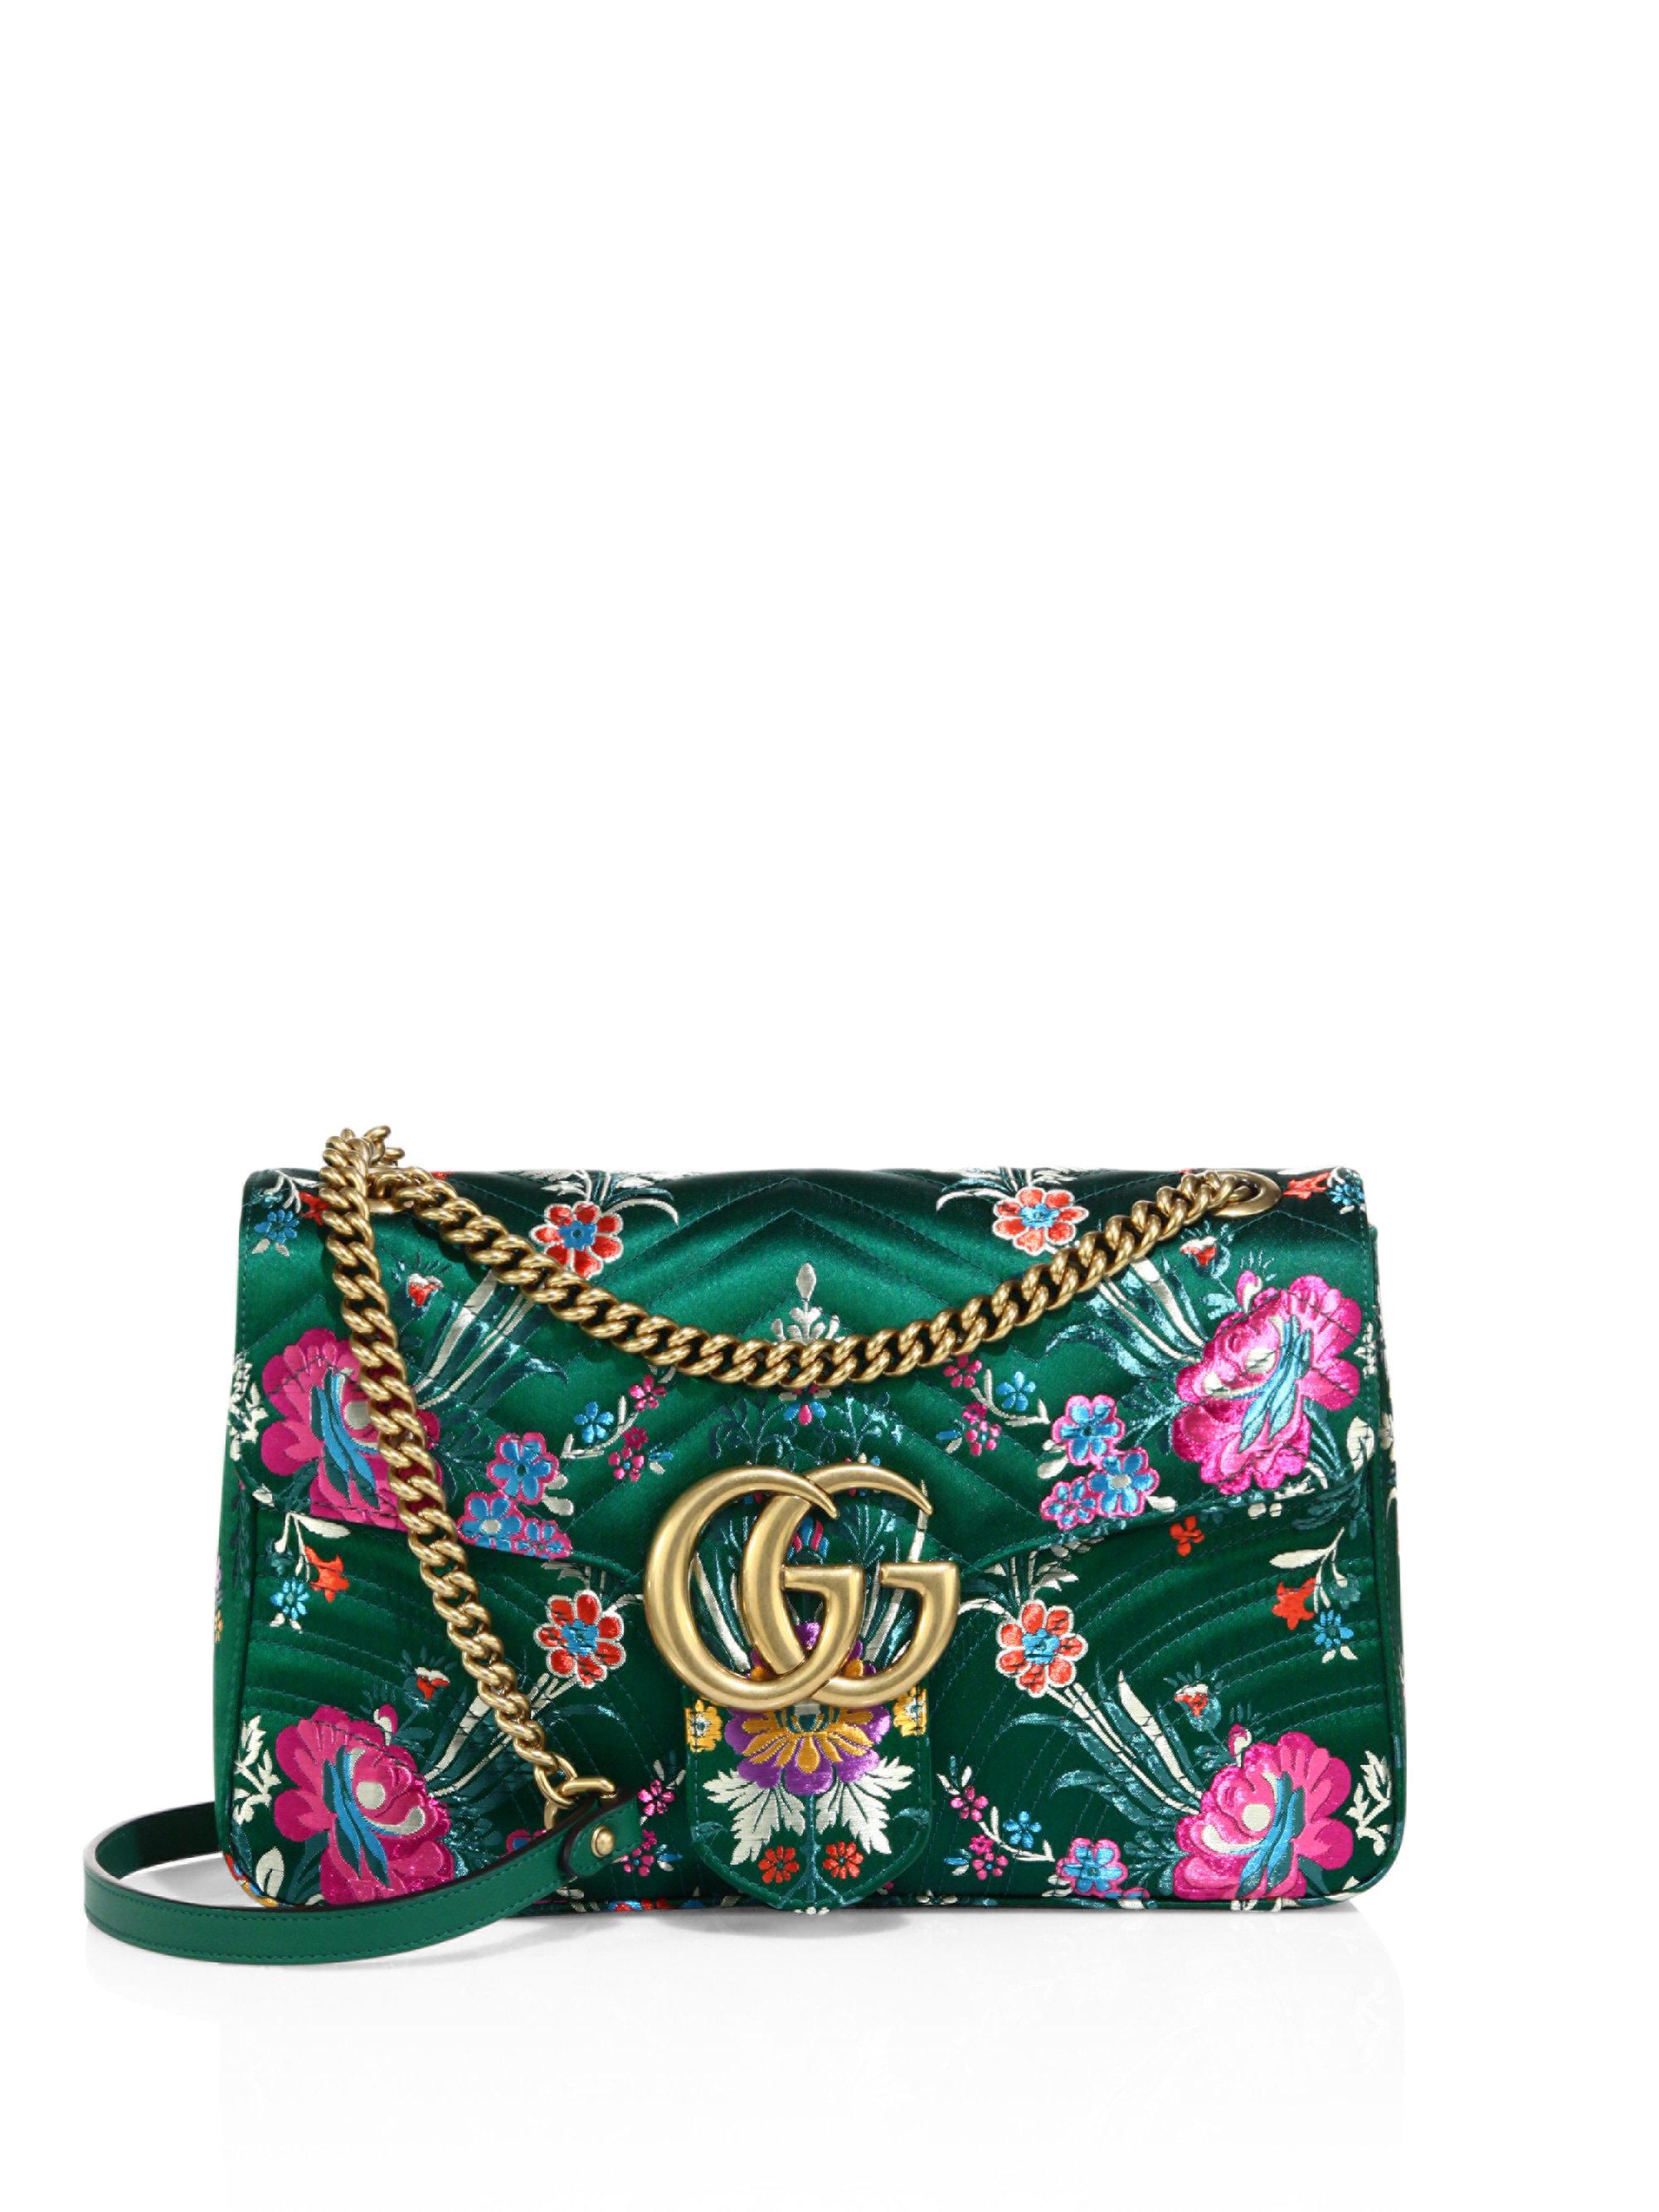 Kommunist fantom apt Gucci Small Gg Marmont Matelasse Floral Jacquard Chain Shoulder Bag in Green  | Lyst